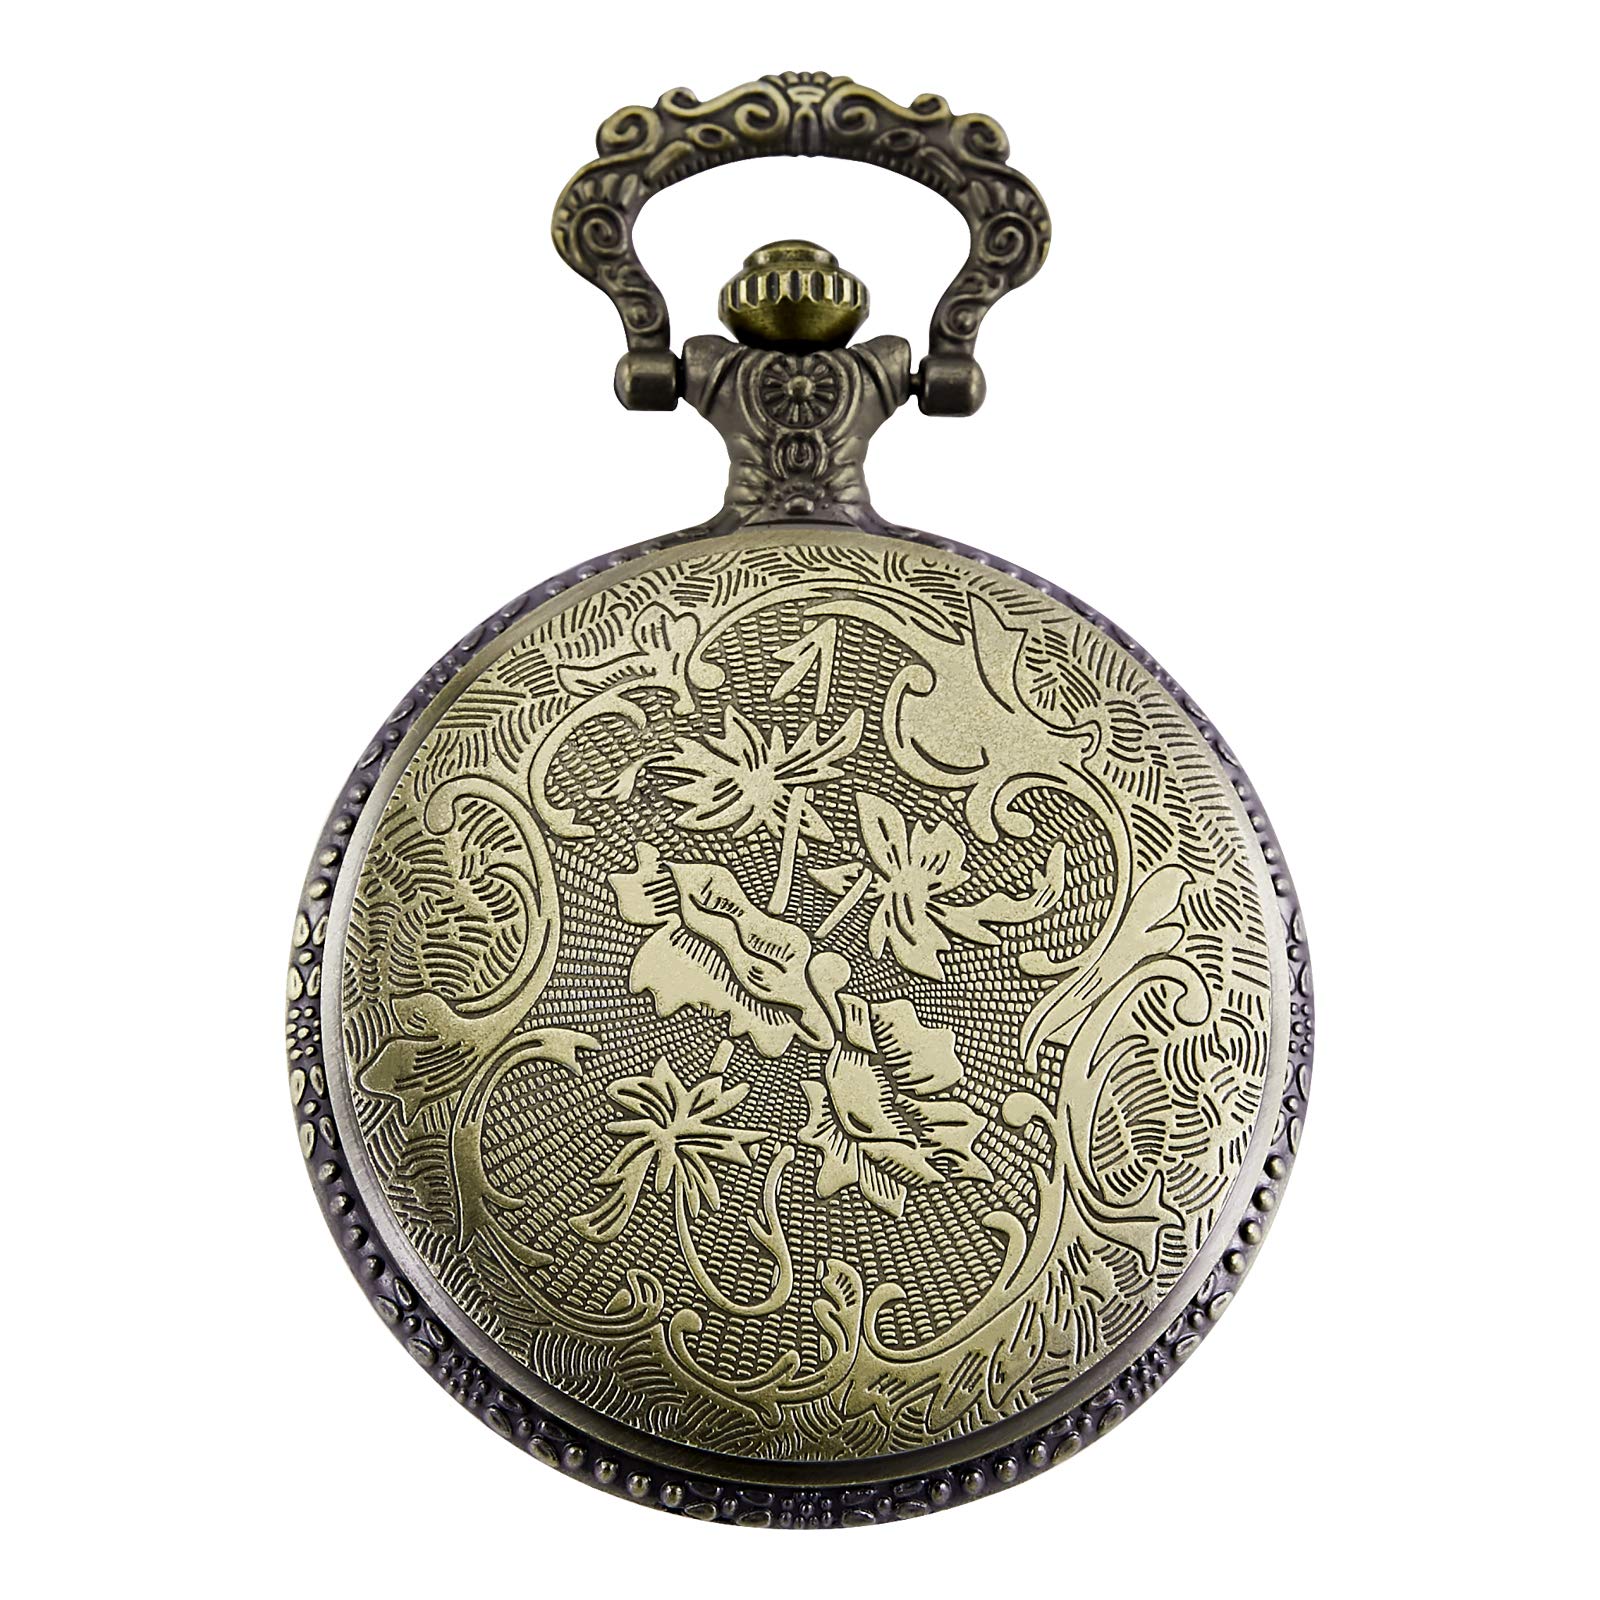 MORFONG Pocket Watch Vintage Steampunk Flower Pattern Fob Quartz Watch for Men Women